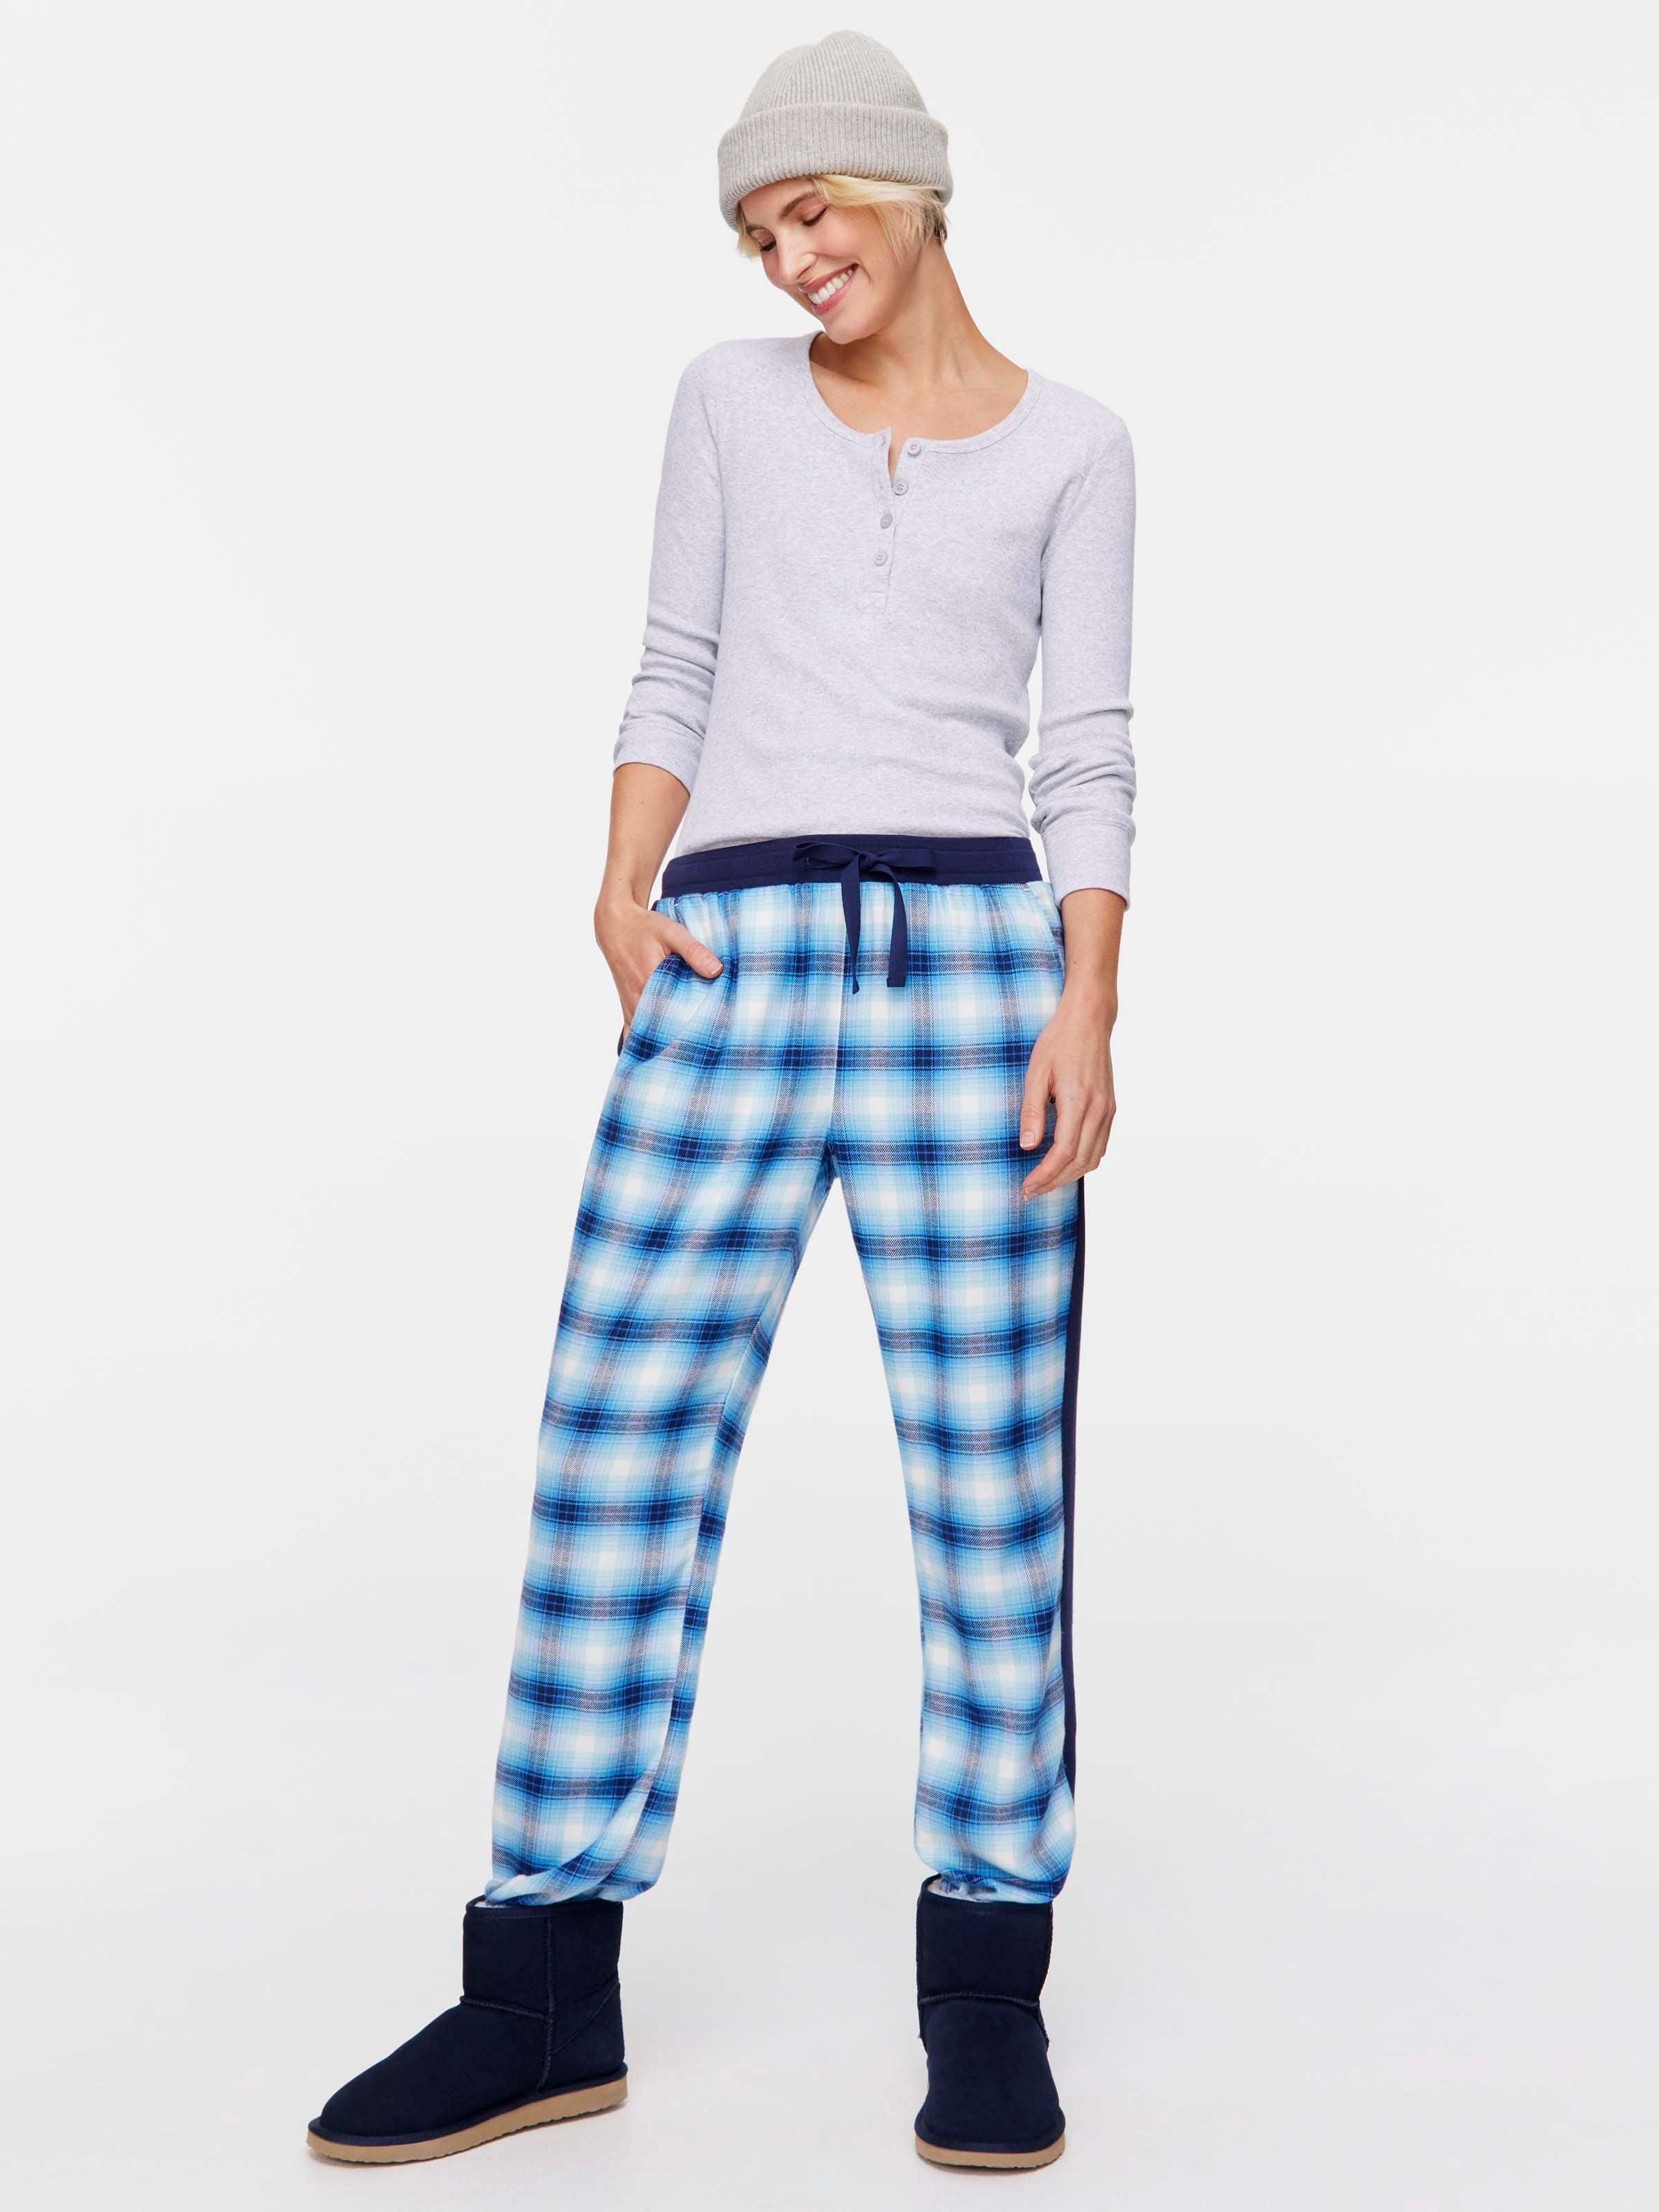 Plaid Pajama Pants Snuggle Up in Softness with Plaid Pajama Bottoms   Kohls